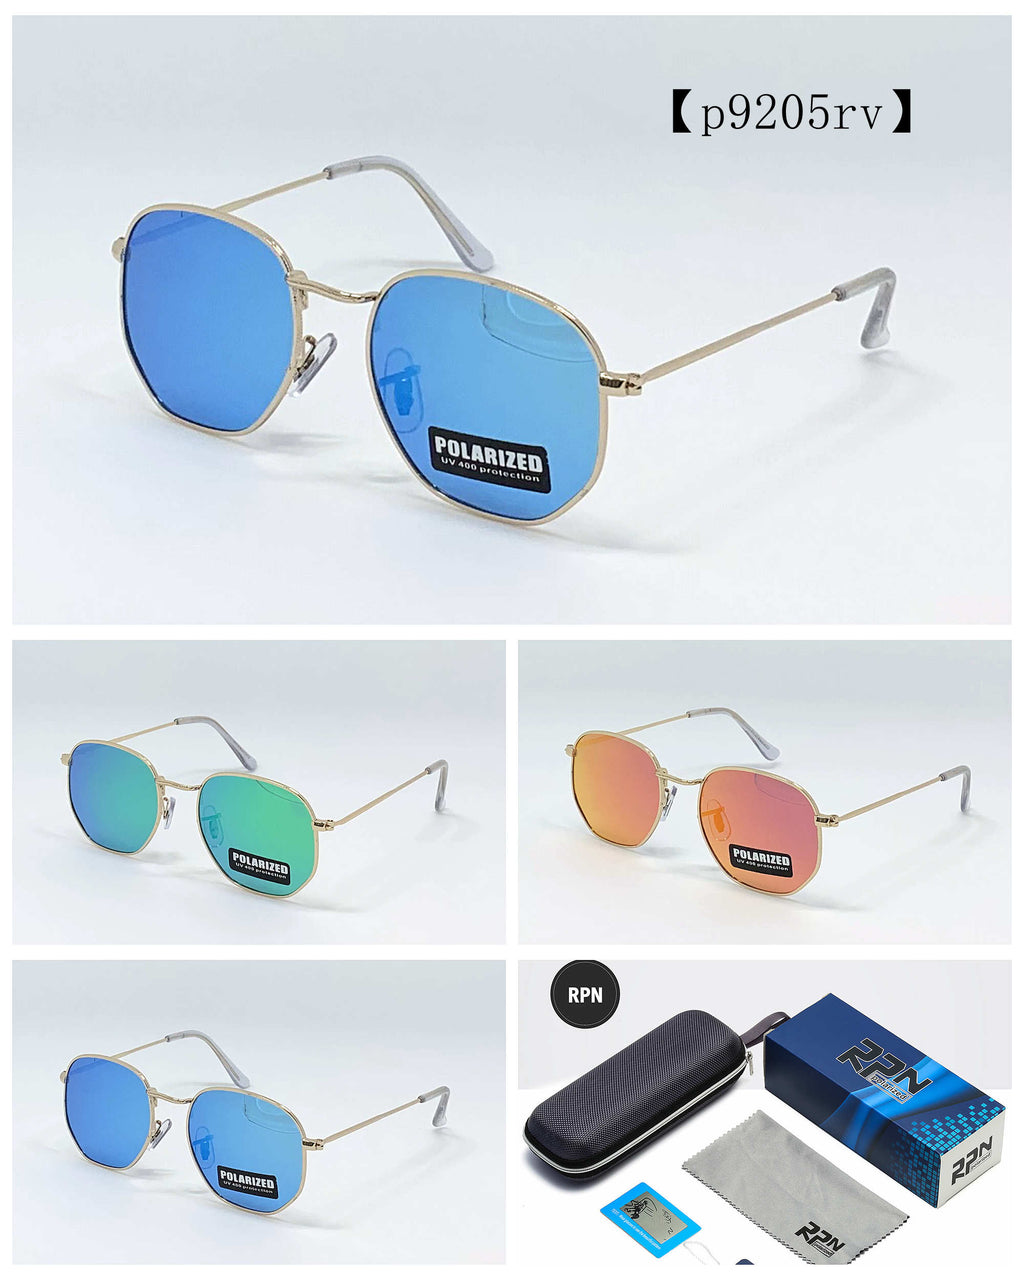 Sunglasses Polarized P9205RV